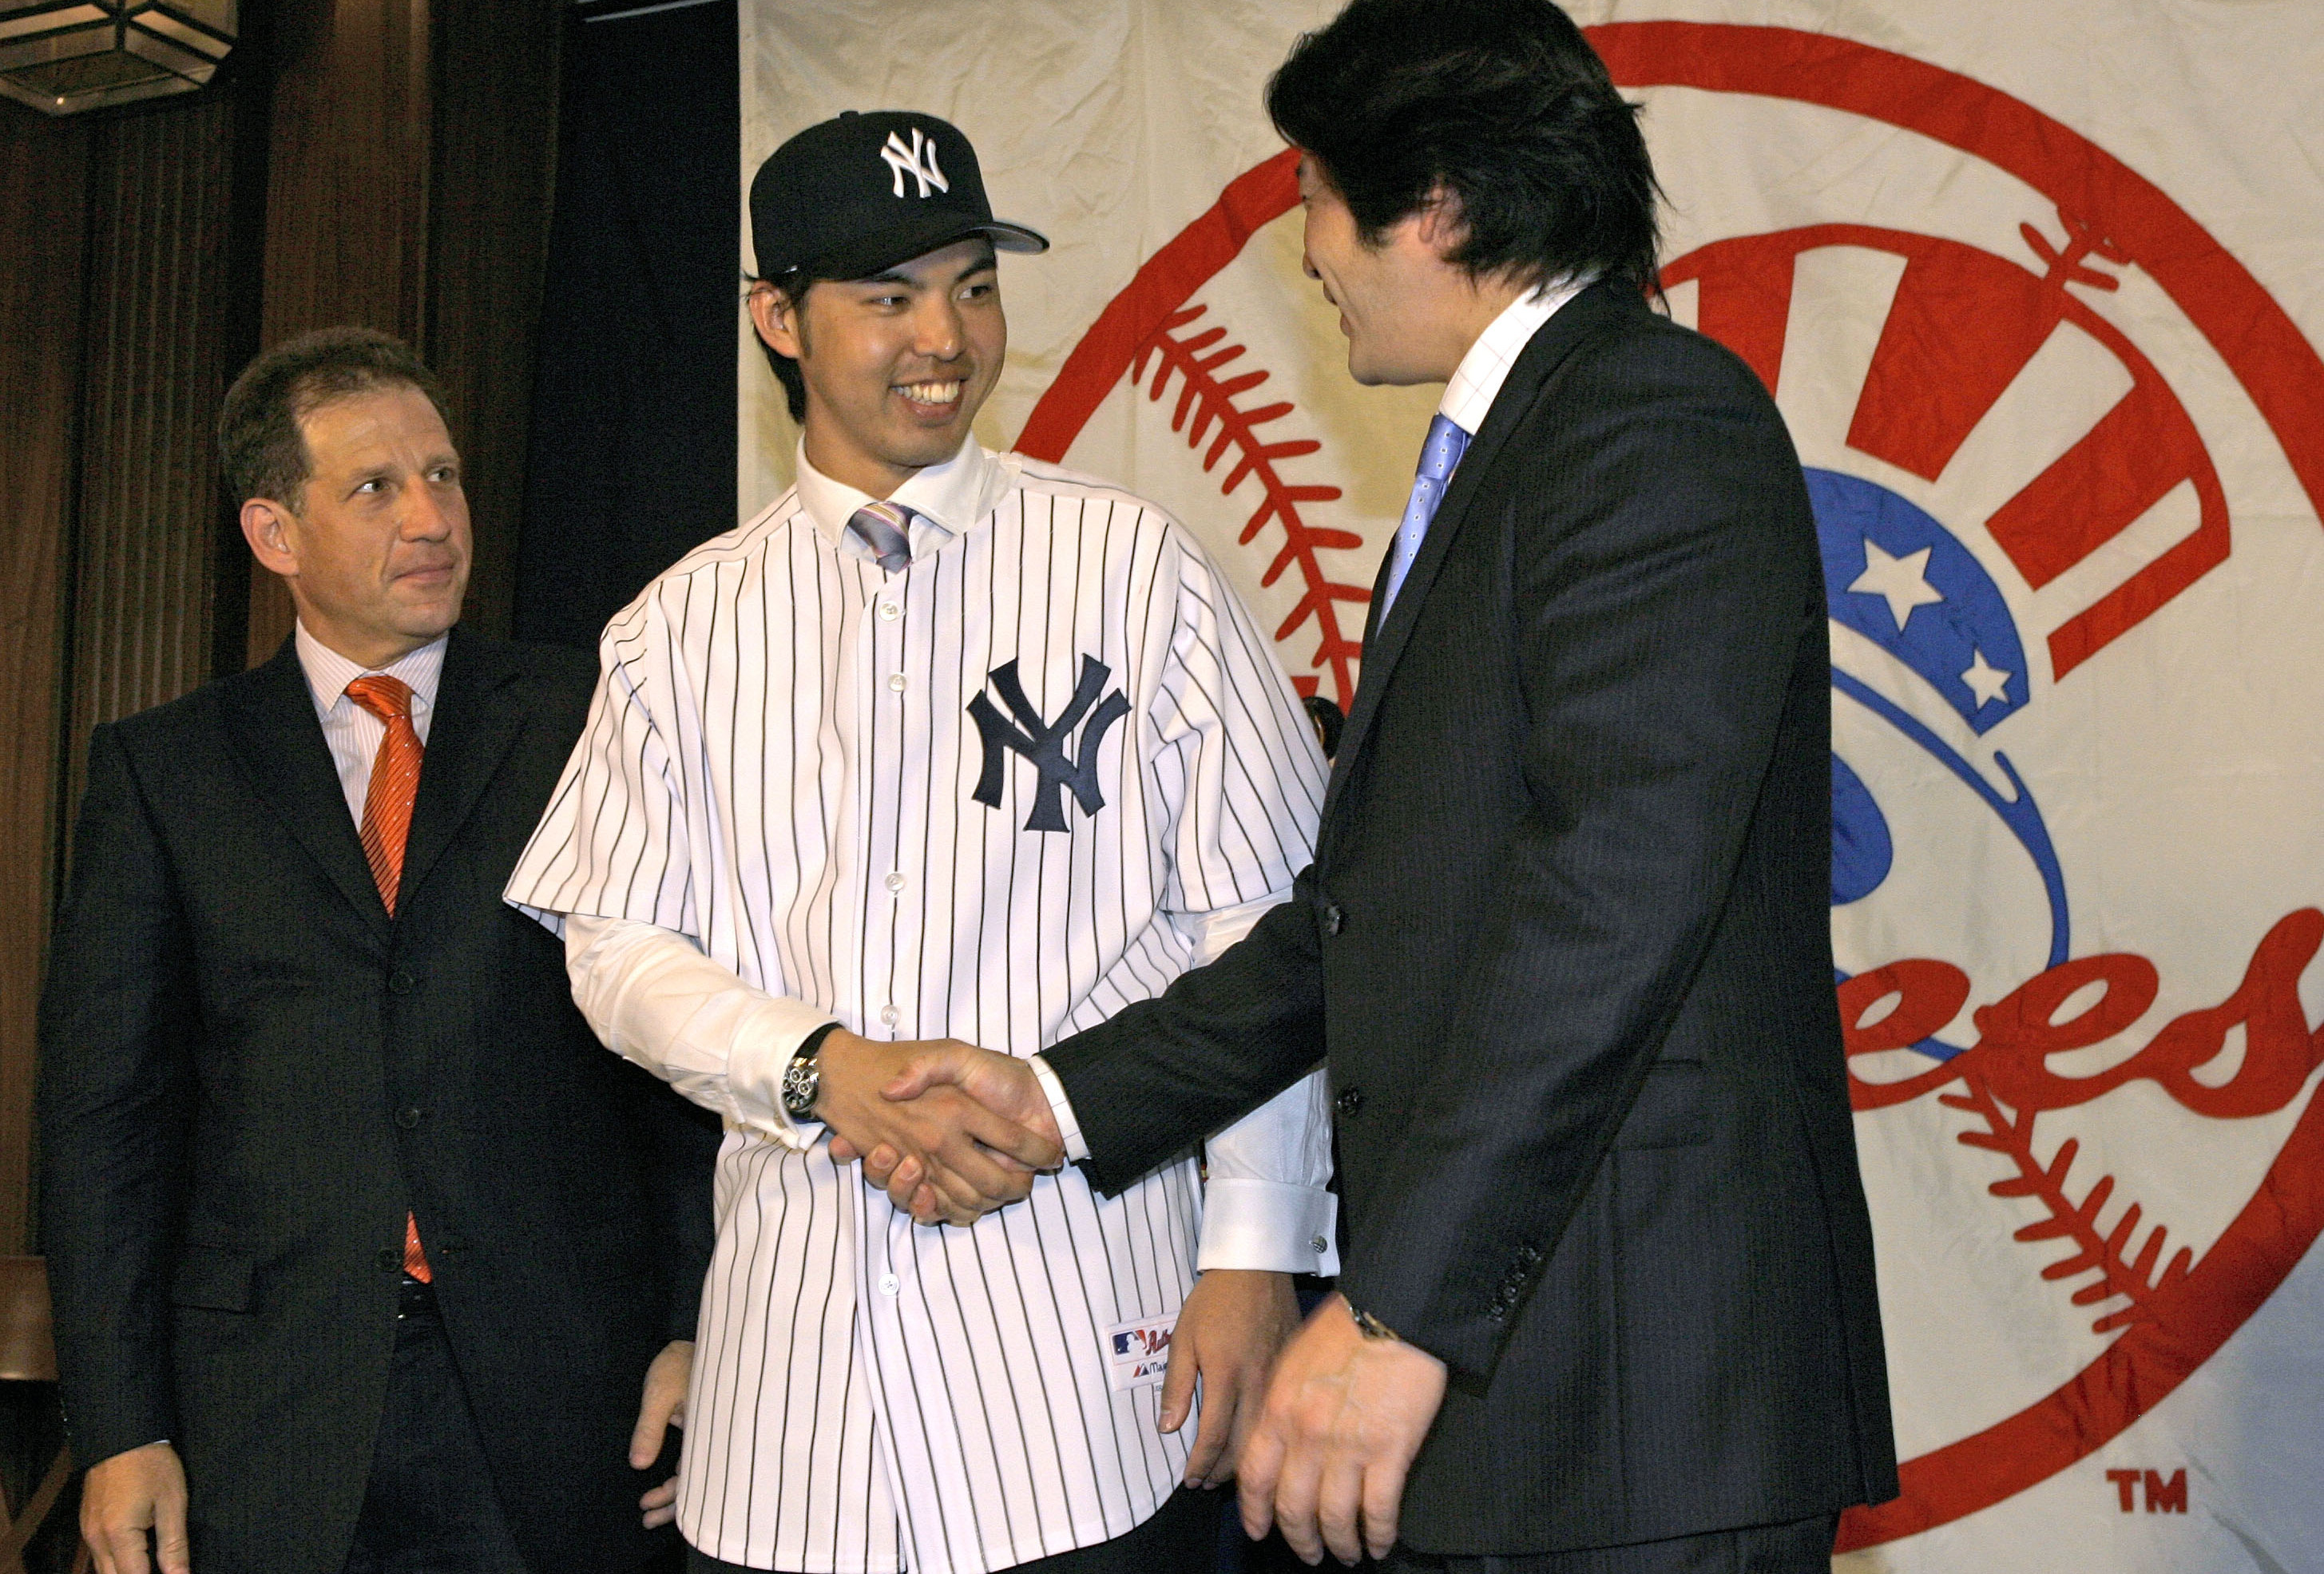 New York Yankees Rickey Henderson, left, greets Yankees relief